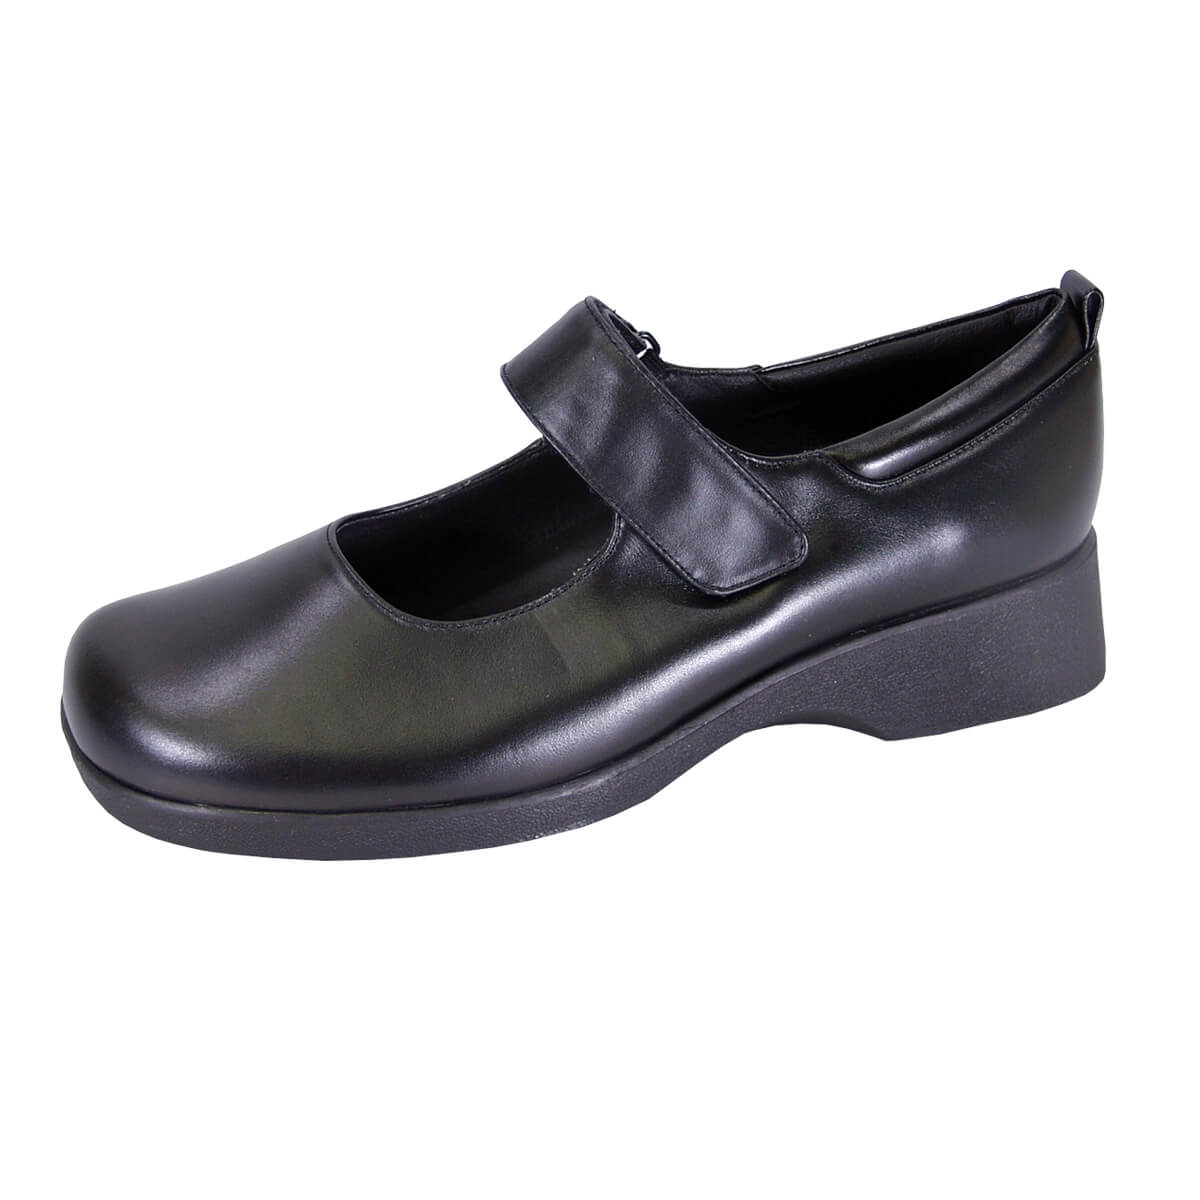 Fazpaz 24 Hour Comfort Sky Women's Wide Width Leather Mary Jane Shoes